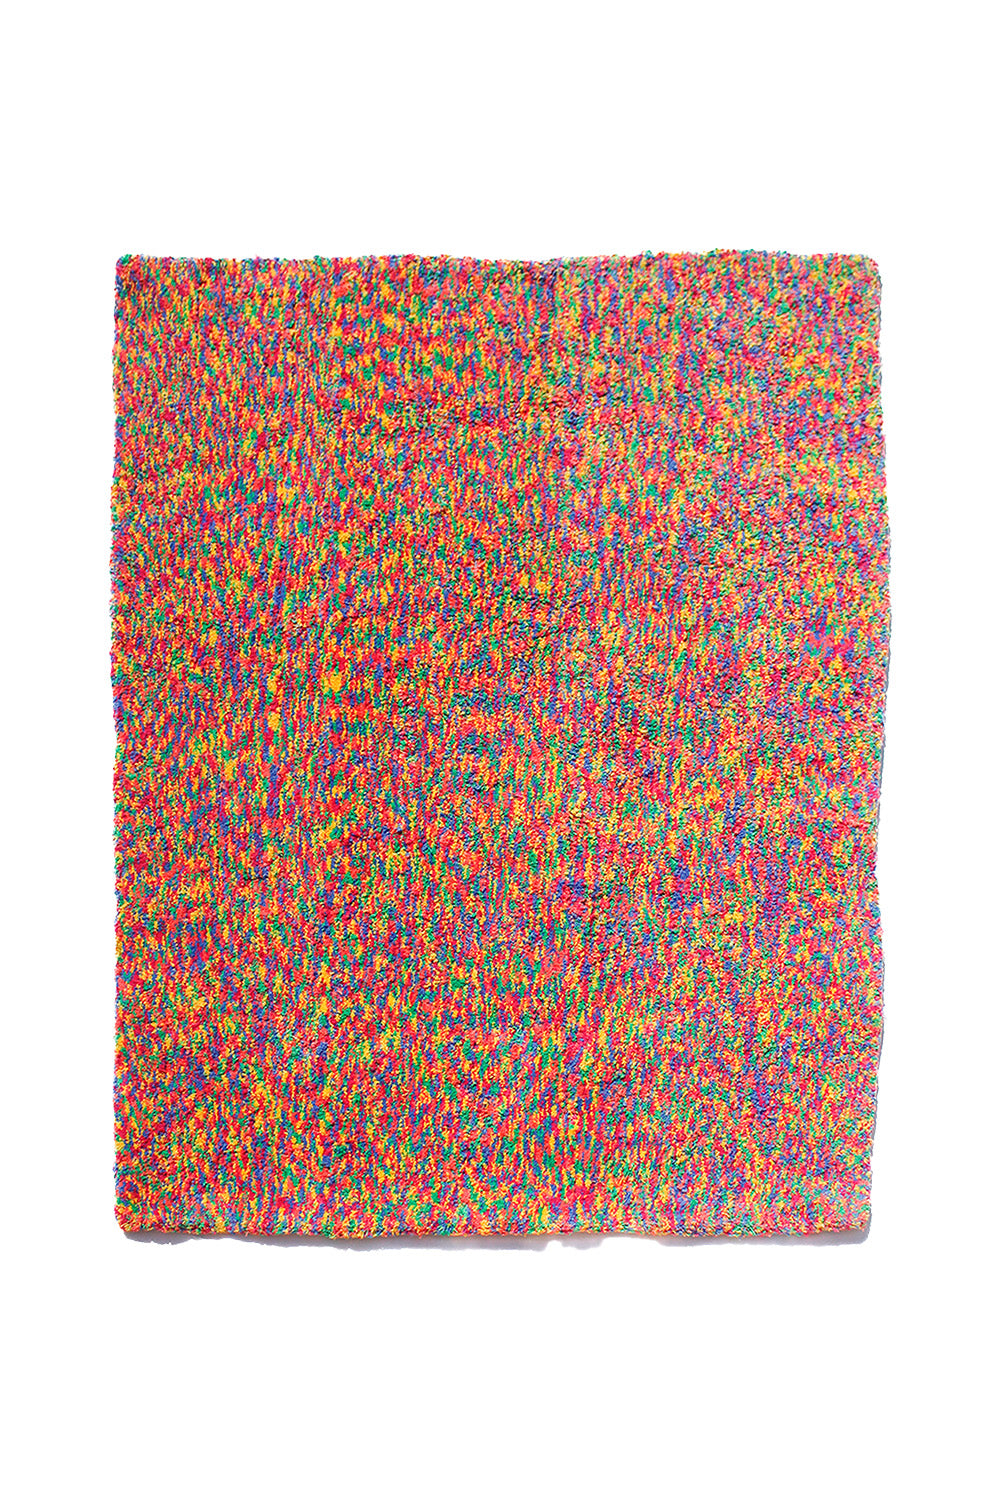 jubi rainbow cotton rug